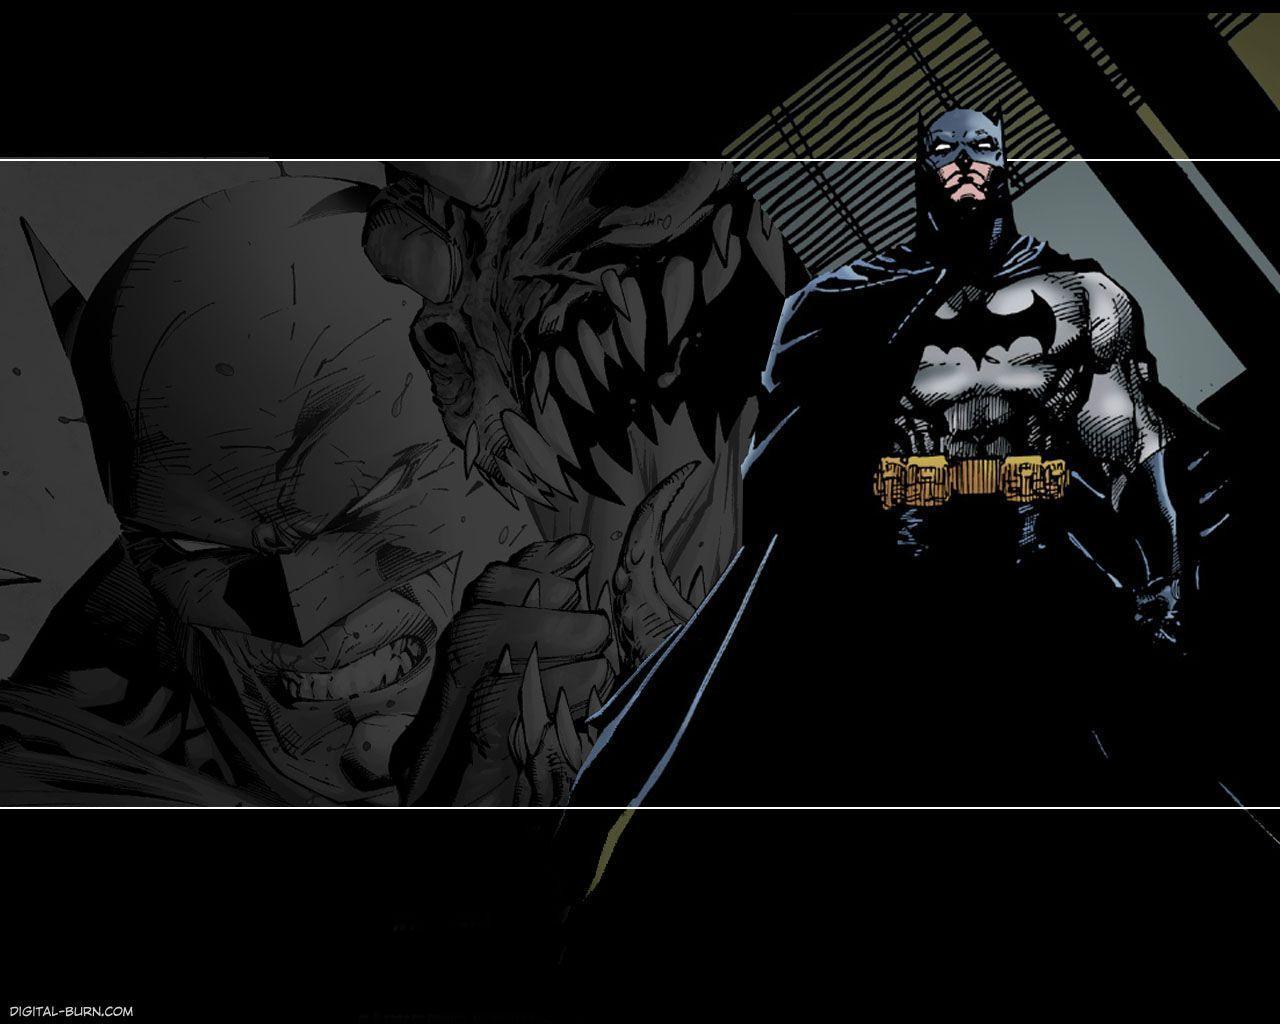 Hush Batman Wallpaper Image & Picture